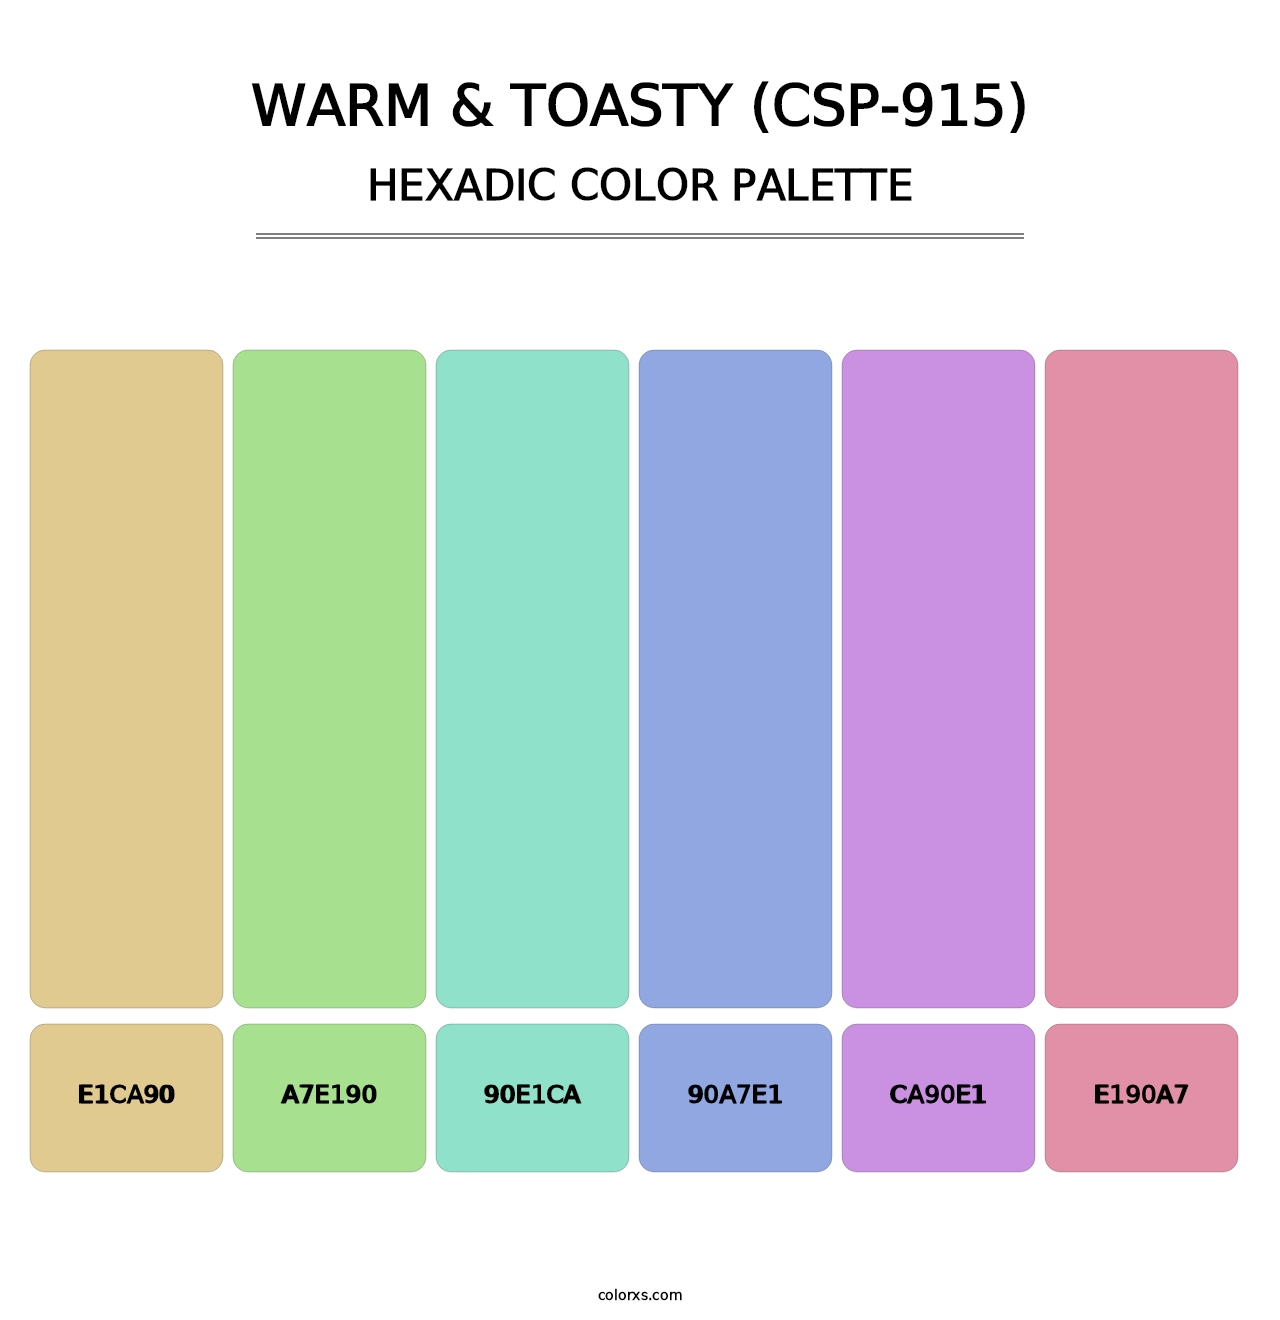 Warm & Toasty (CSP-915) - Hexadic Color Palette